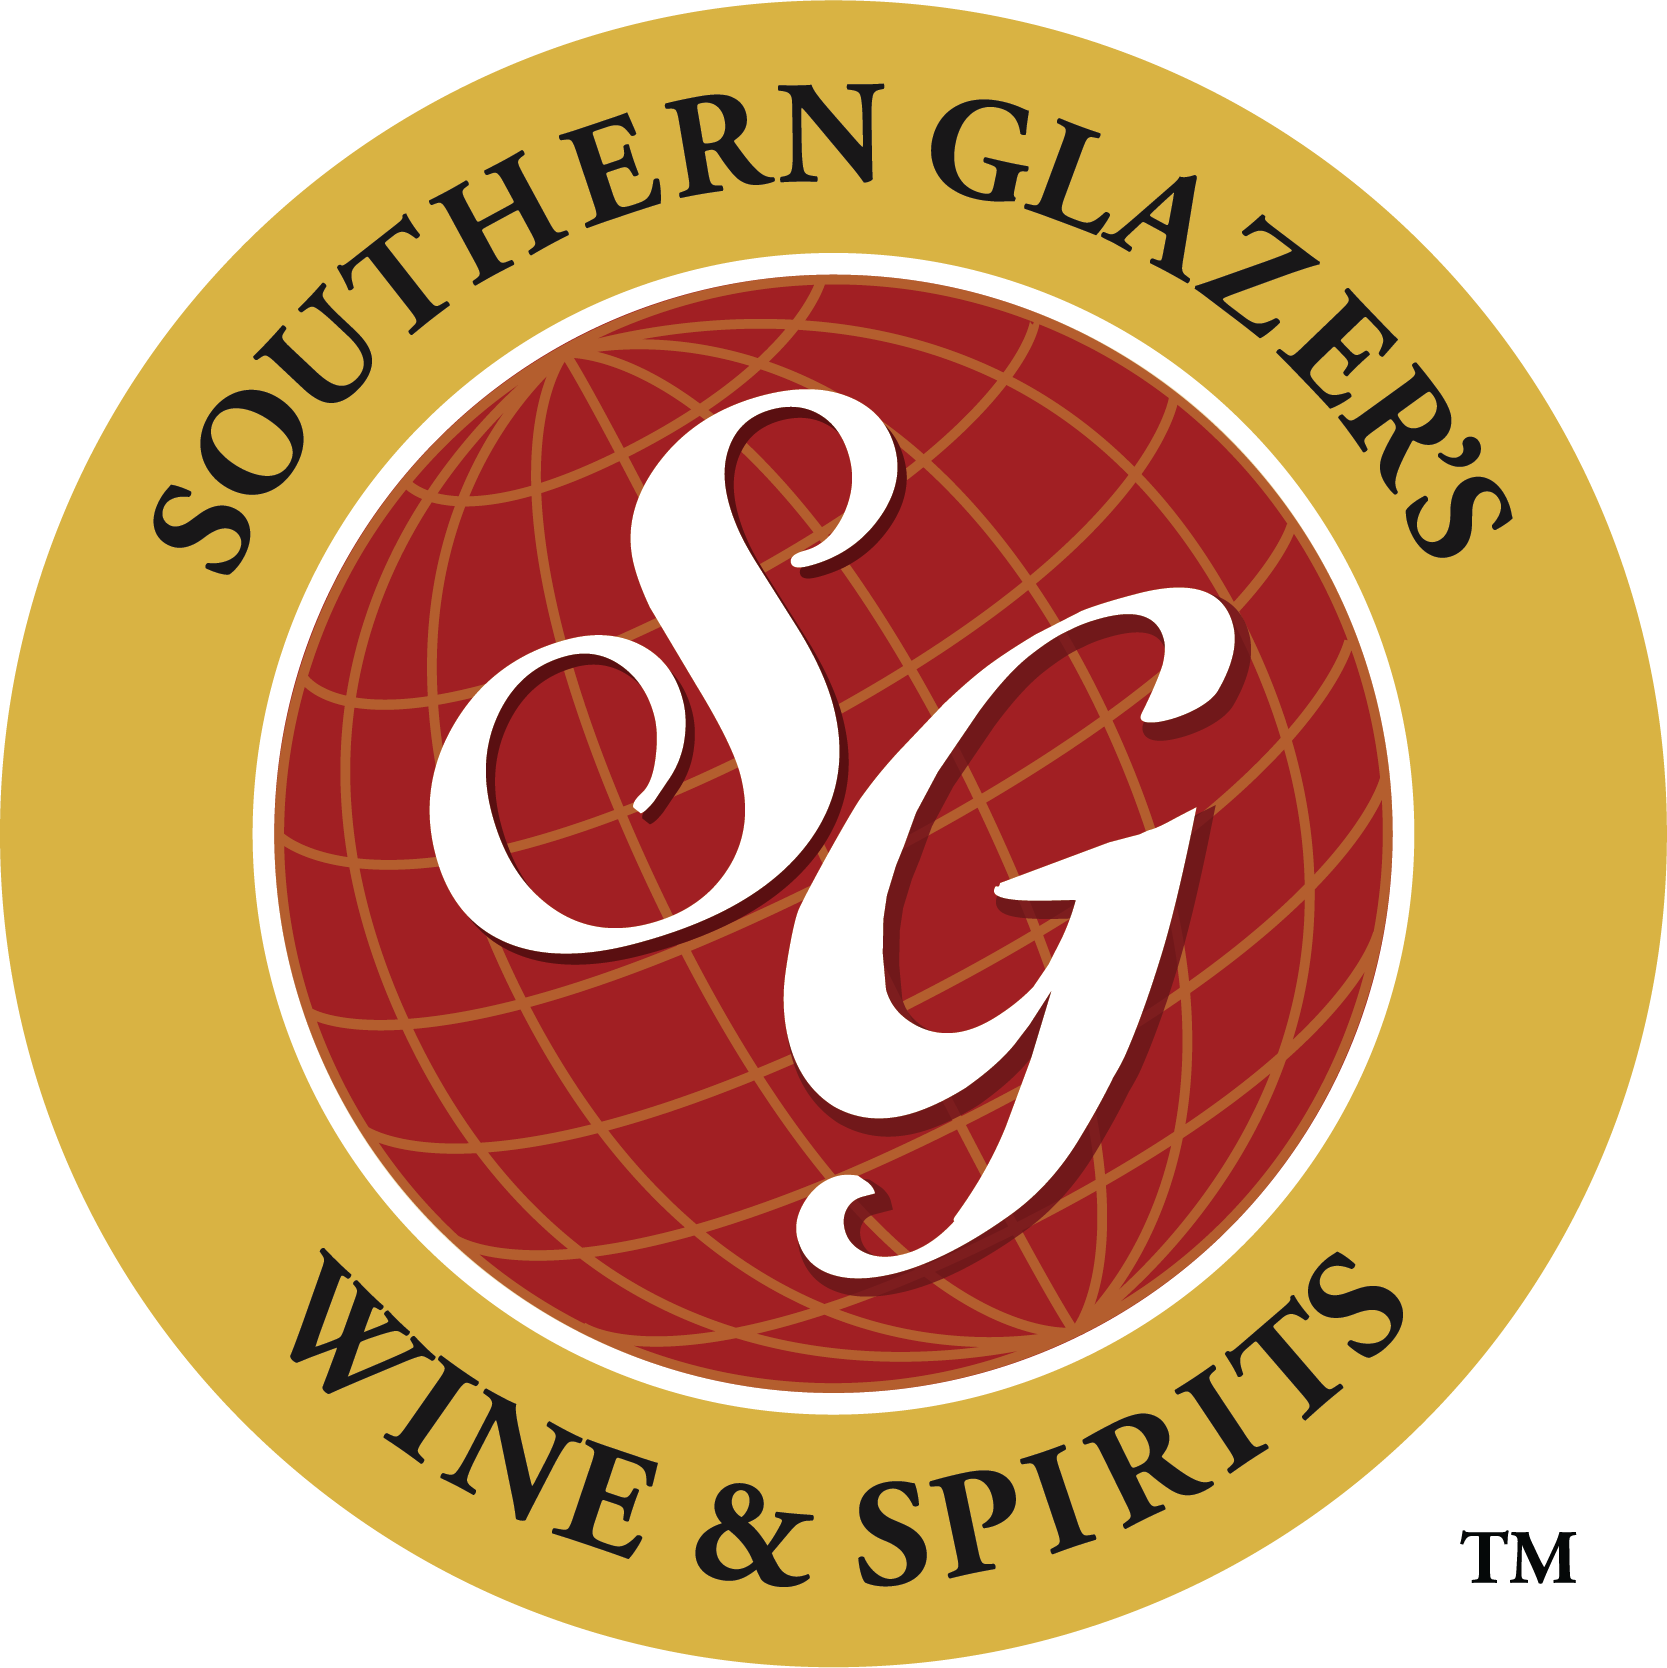 Southern Glazer's Wine & Spirits (SL)